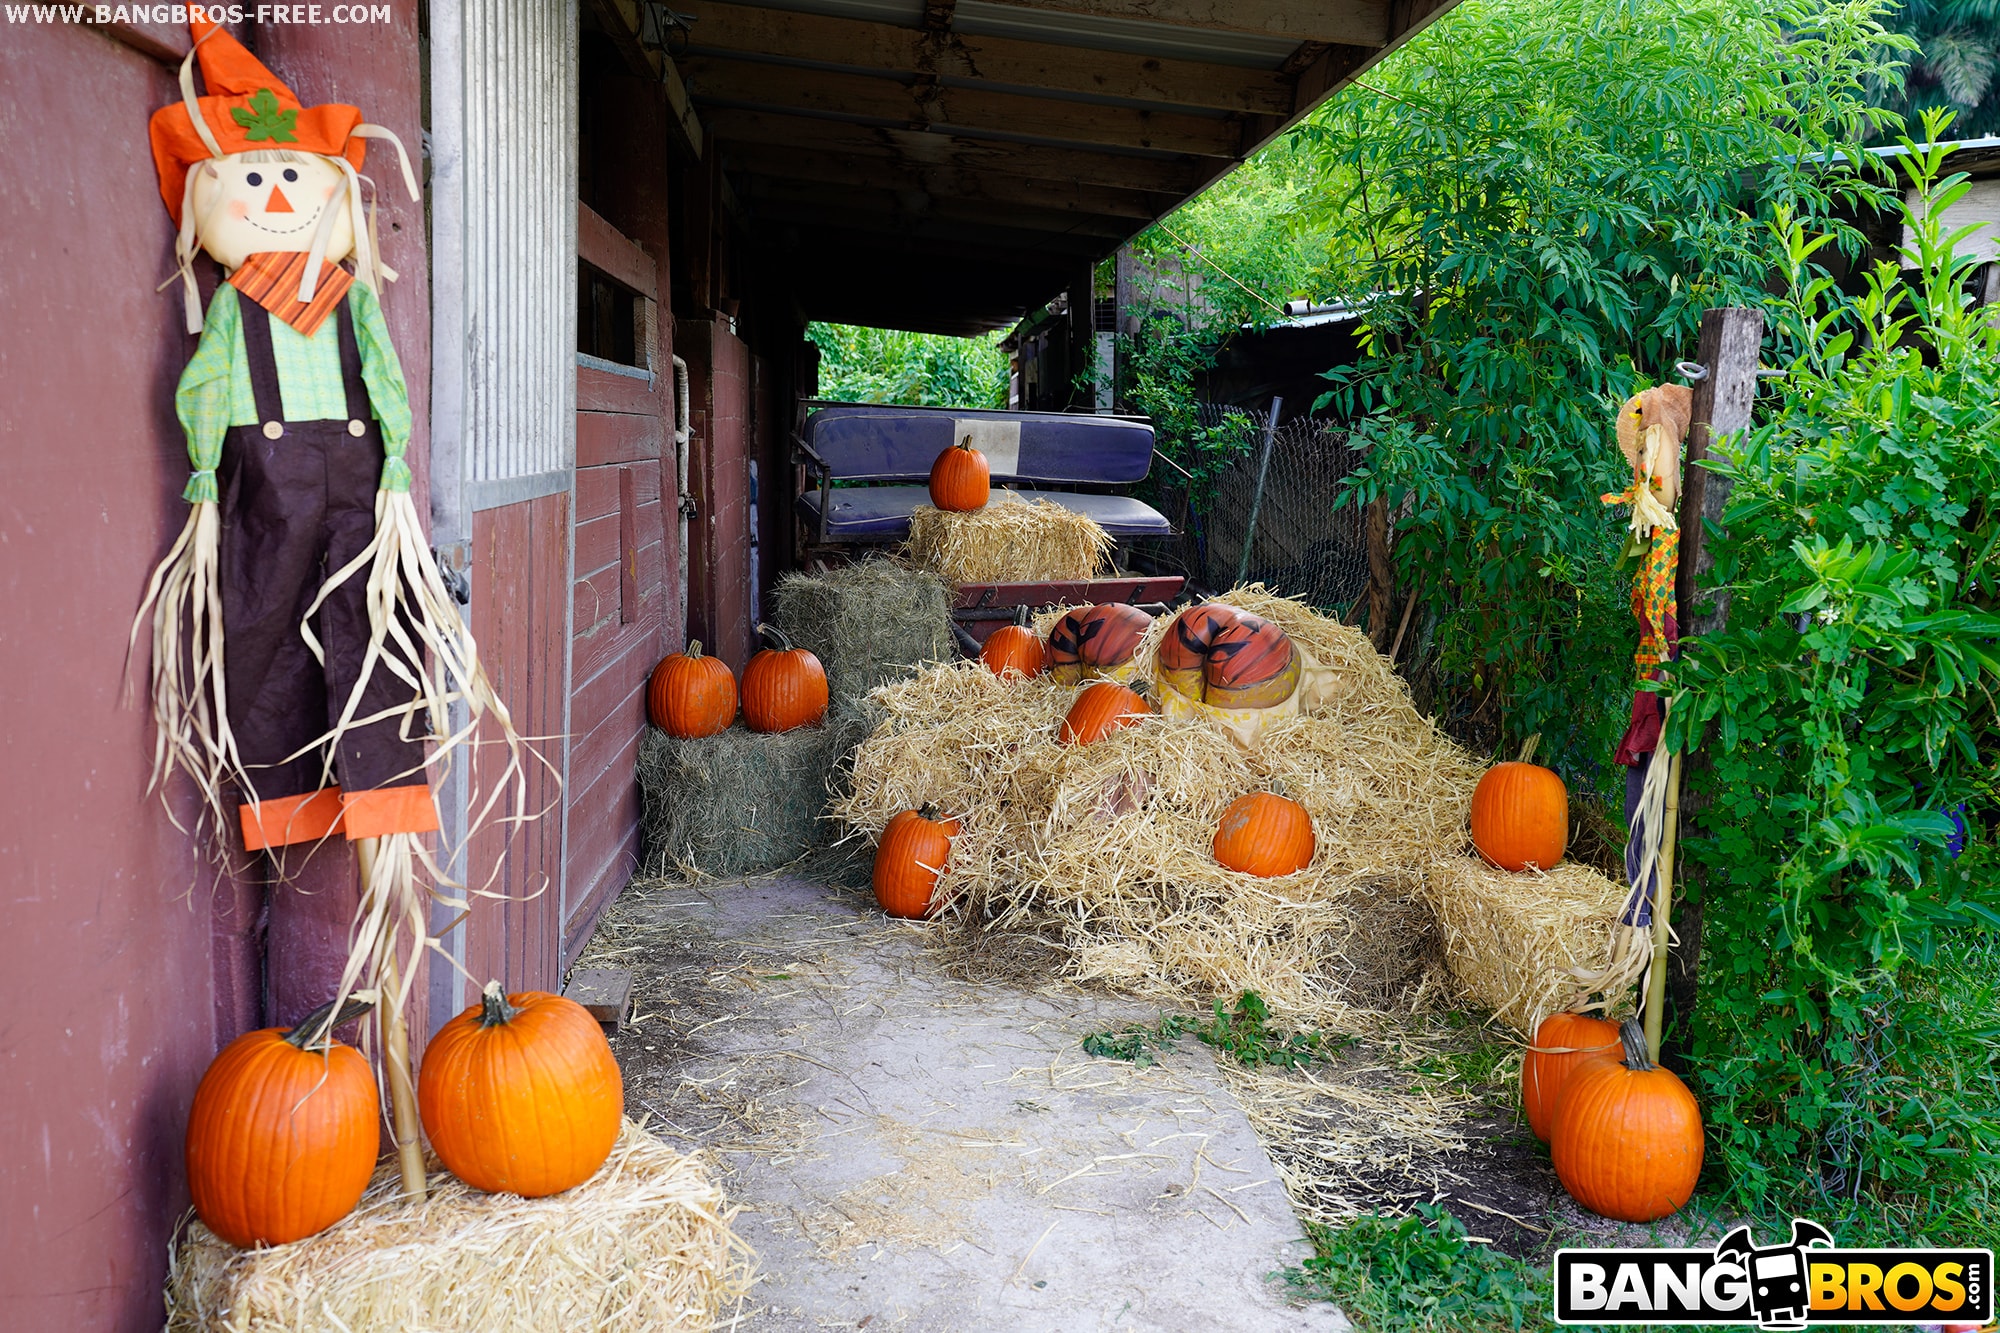 Bangbros 'Pumpkin Booty Patch' starring Rose Monroe (Photo 3)